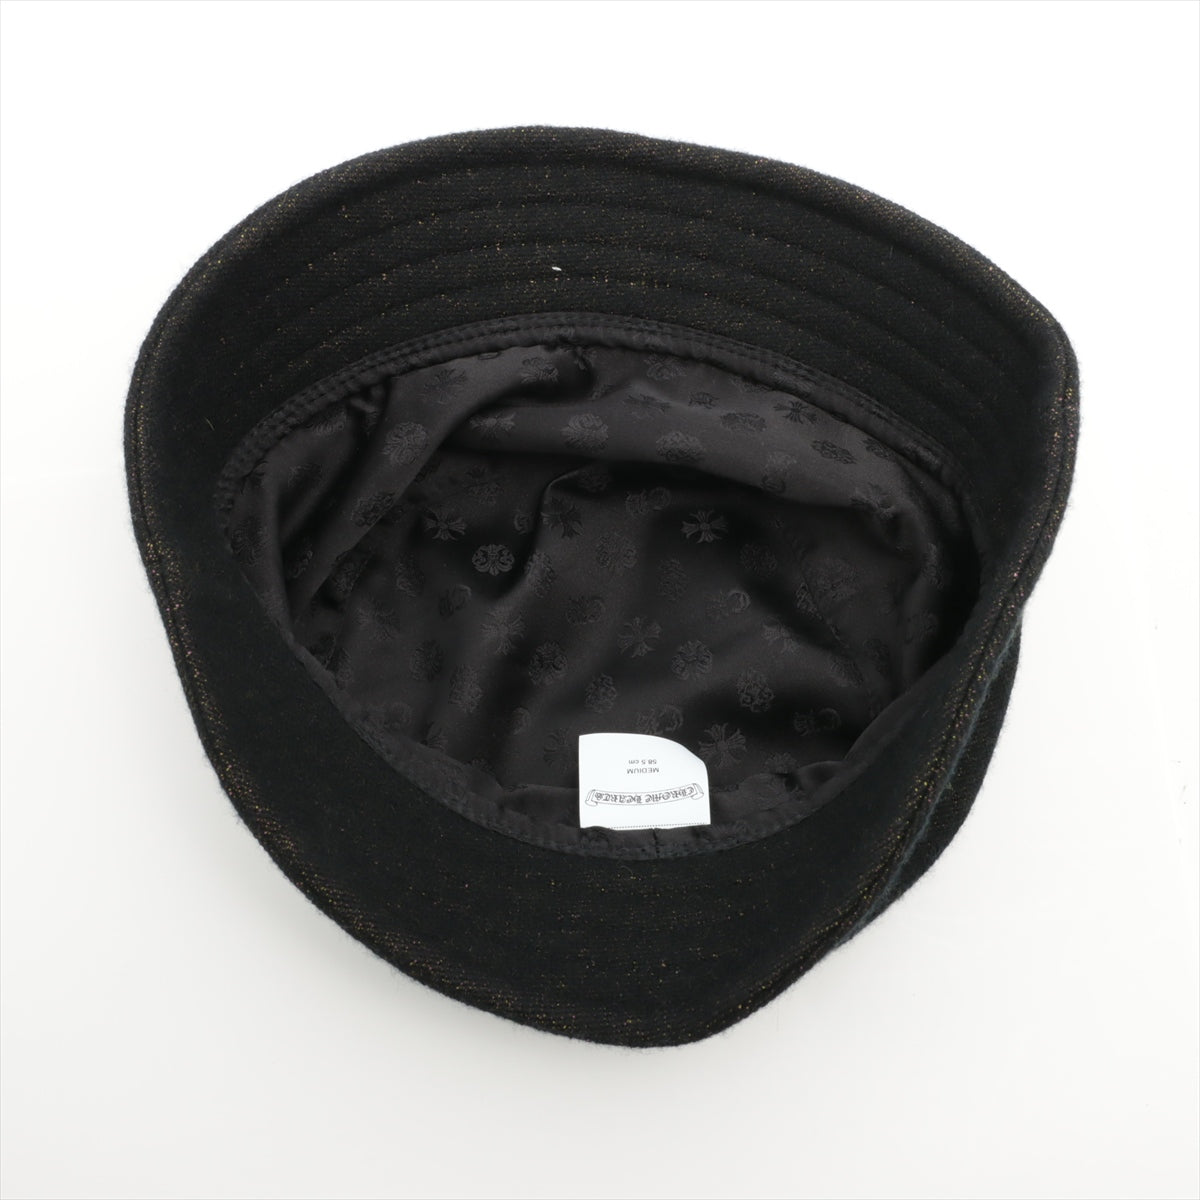 Chrome Hearts Matty Boy Bucket Hat Cashmere & Silk size M 58.5cm Black sex record